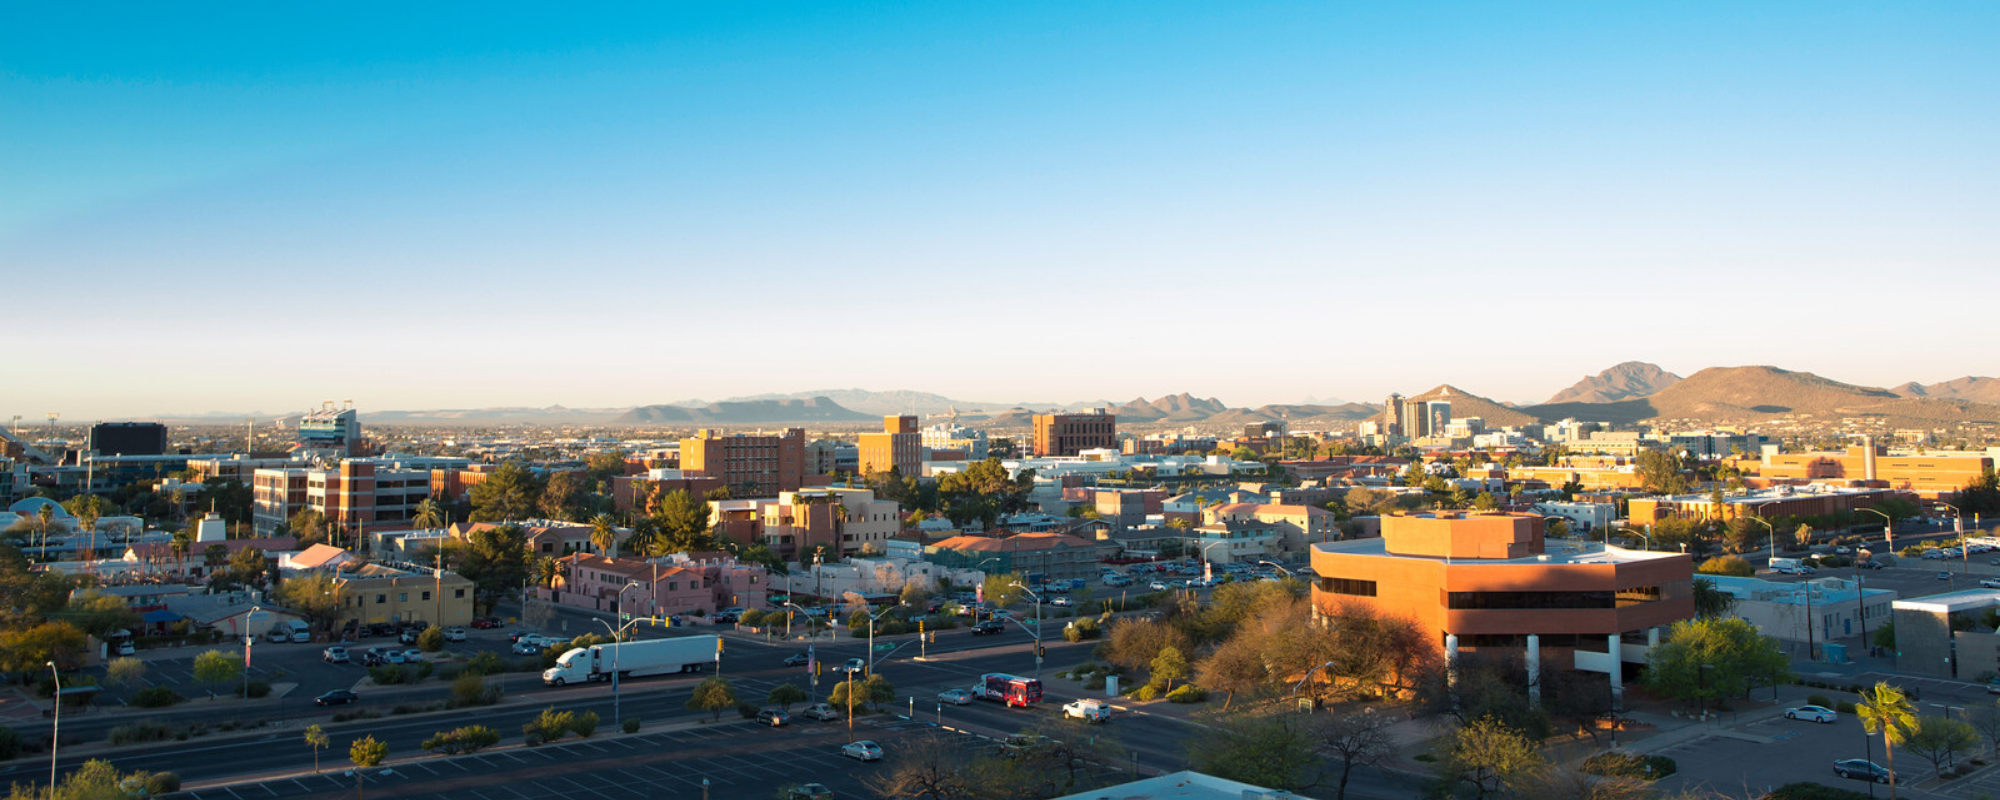 View of Tucson